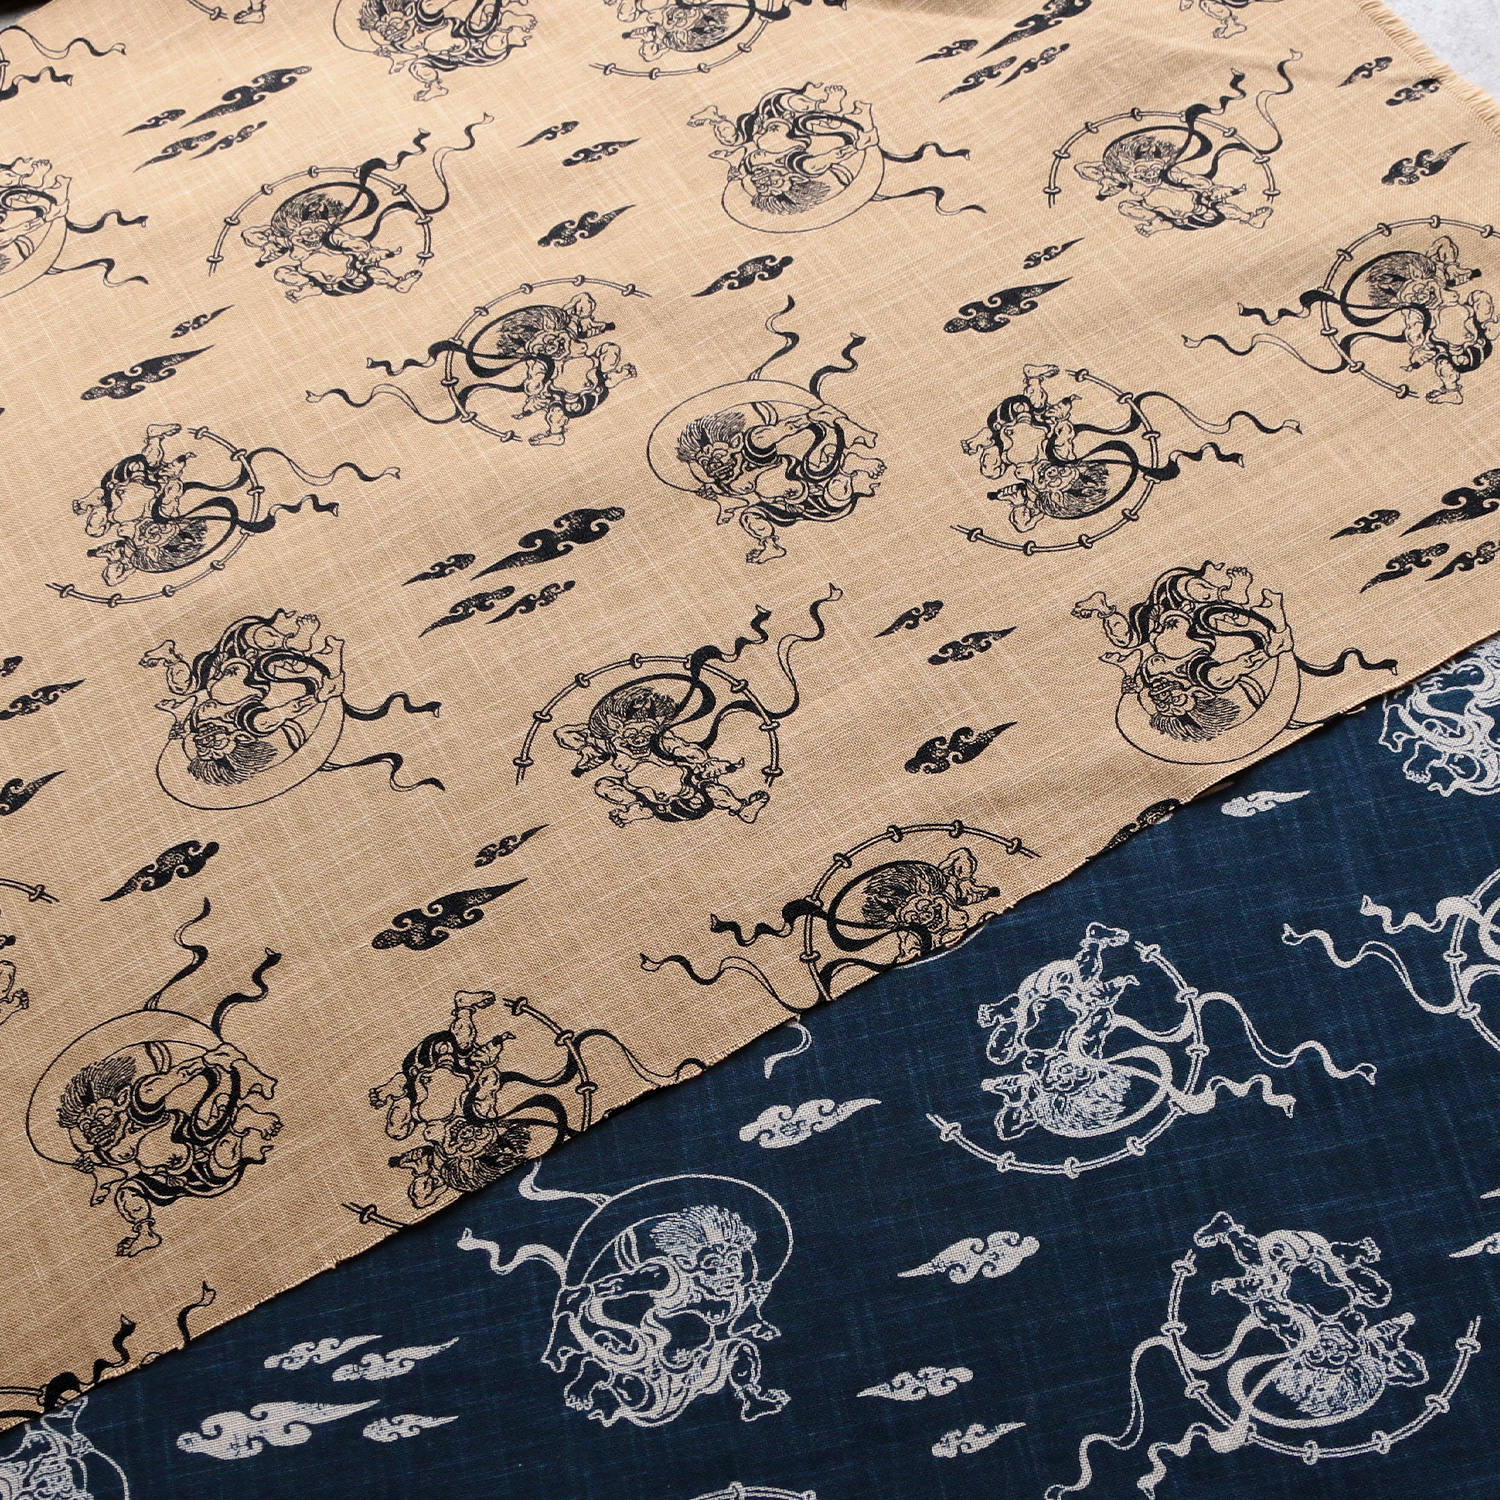 ■KW7070R-8 Japanese Pattern Fabric Indigo Dye Butcher Fujin Raijin Raw Fabric Approximately 11m (Roll)